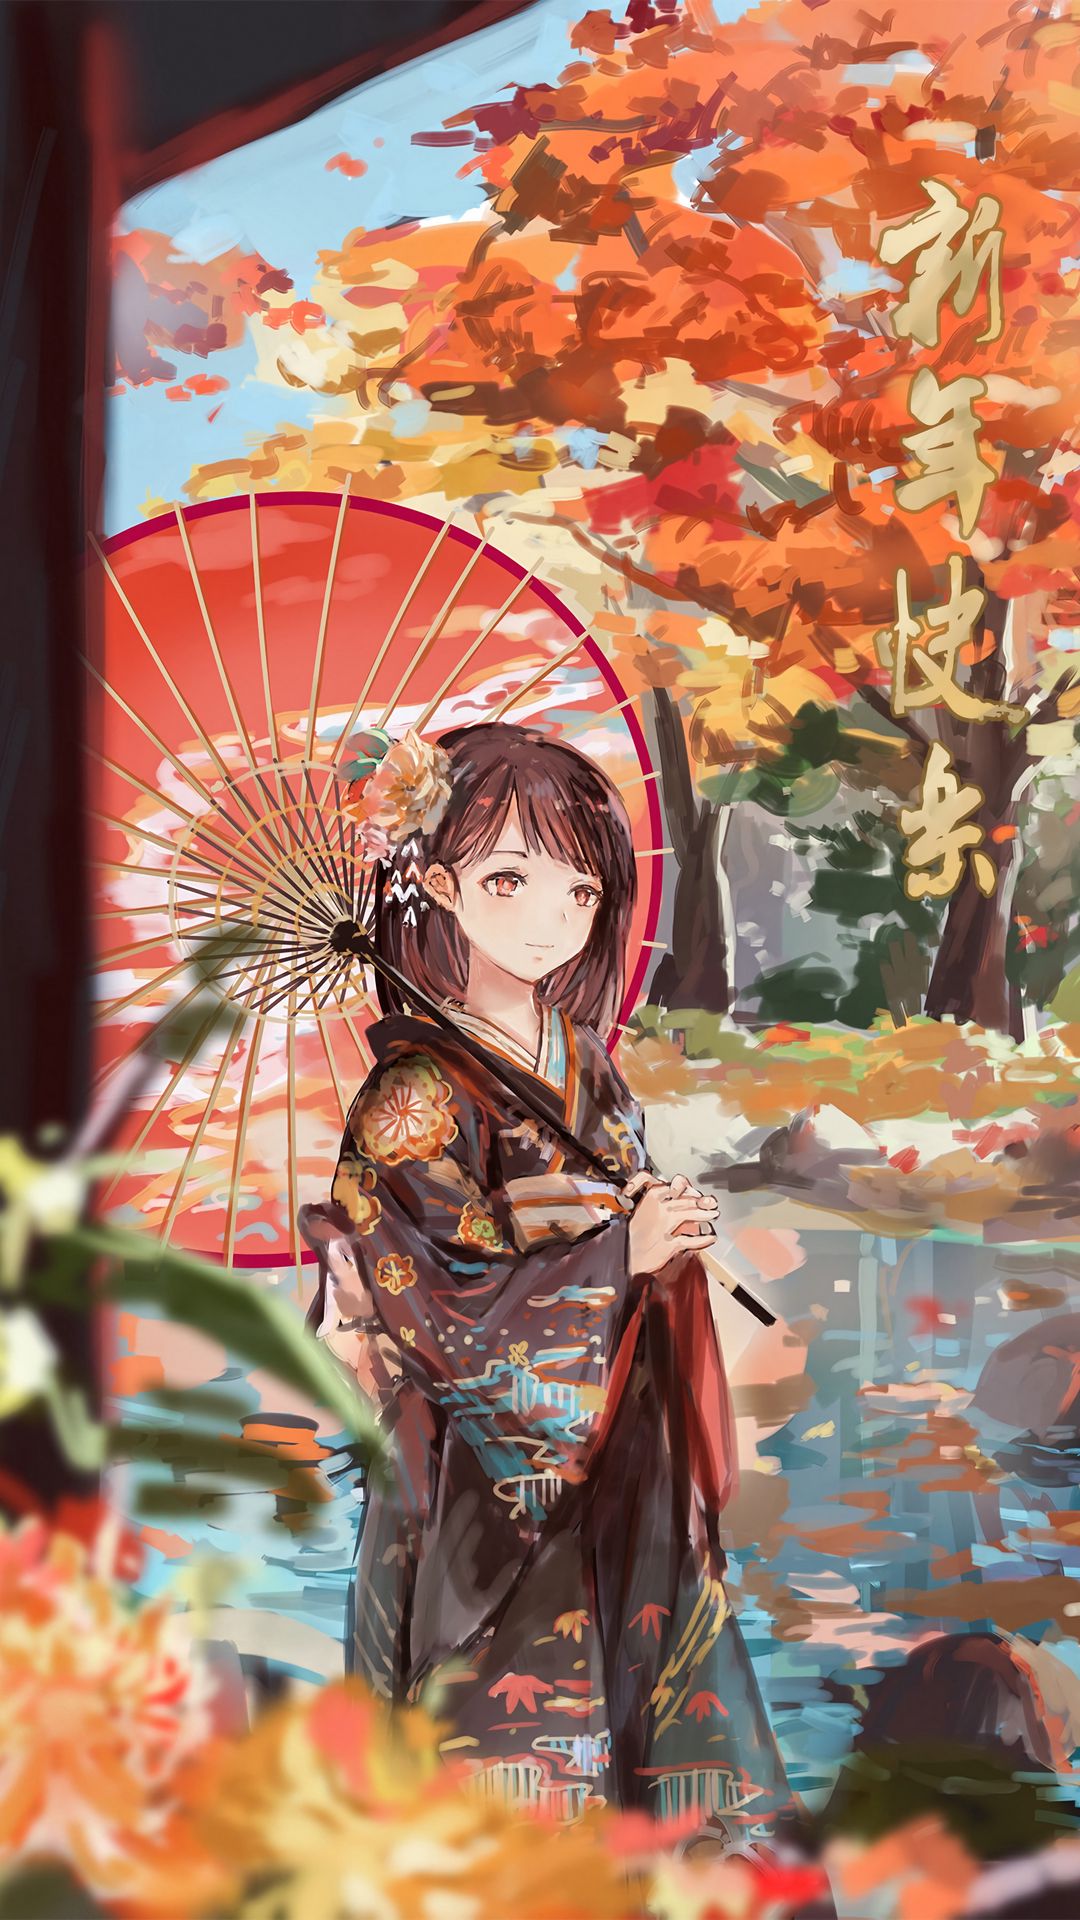 Download Wallpaper 1080x19 Girl Umbrella Anime Kimono Garden Autumn Samsung Galaxy S4 S5 Note Sony Xperia Z Z1 Z2 Z3 Htc One Lenovo Vibe Hd Background